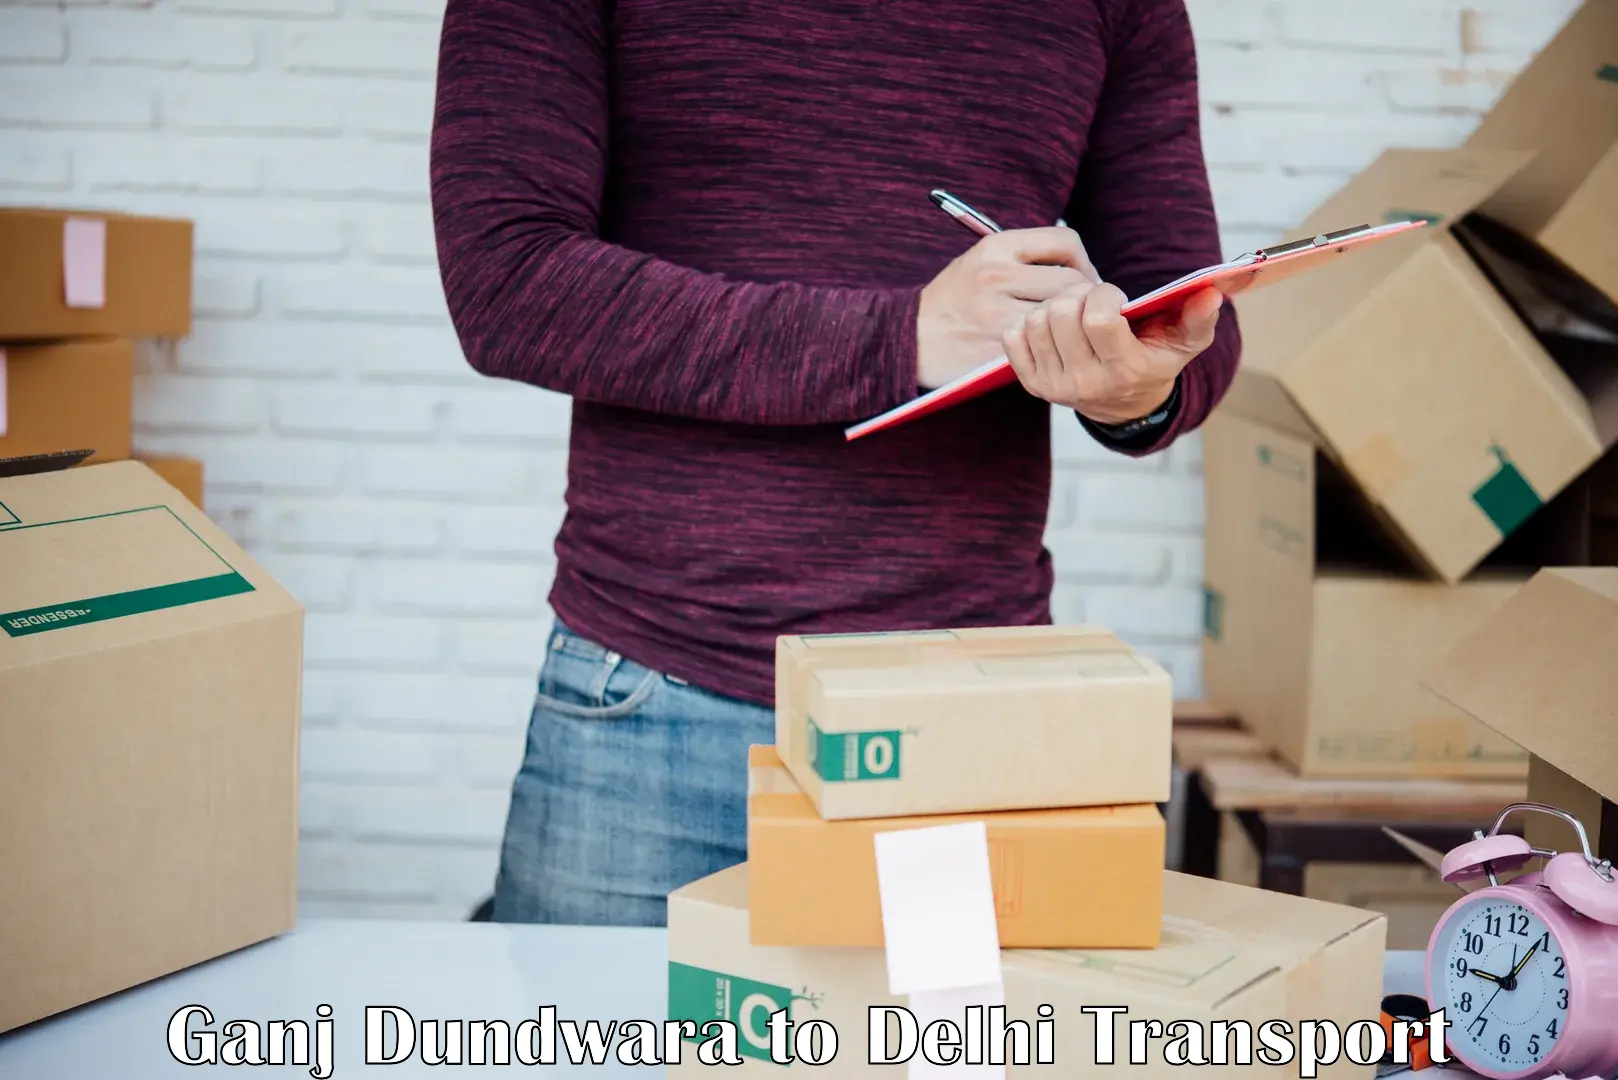 Domestic goods transportation services Ganj Dundwara to Lodhi Road